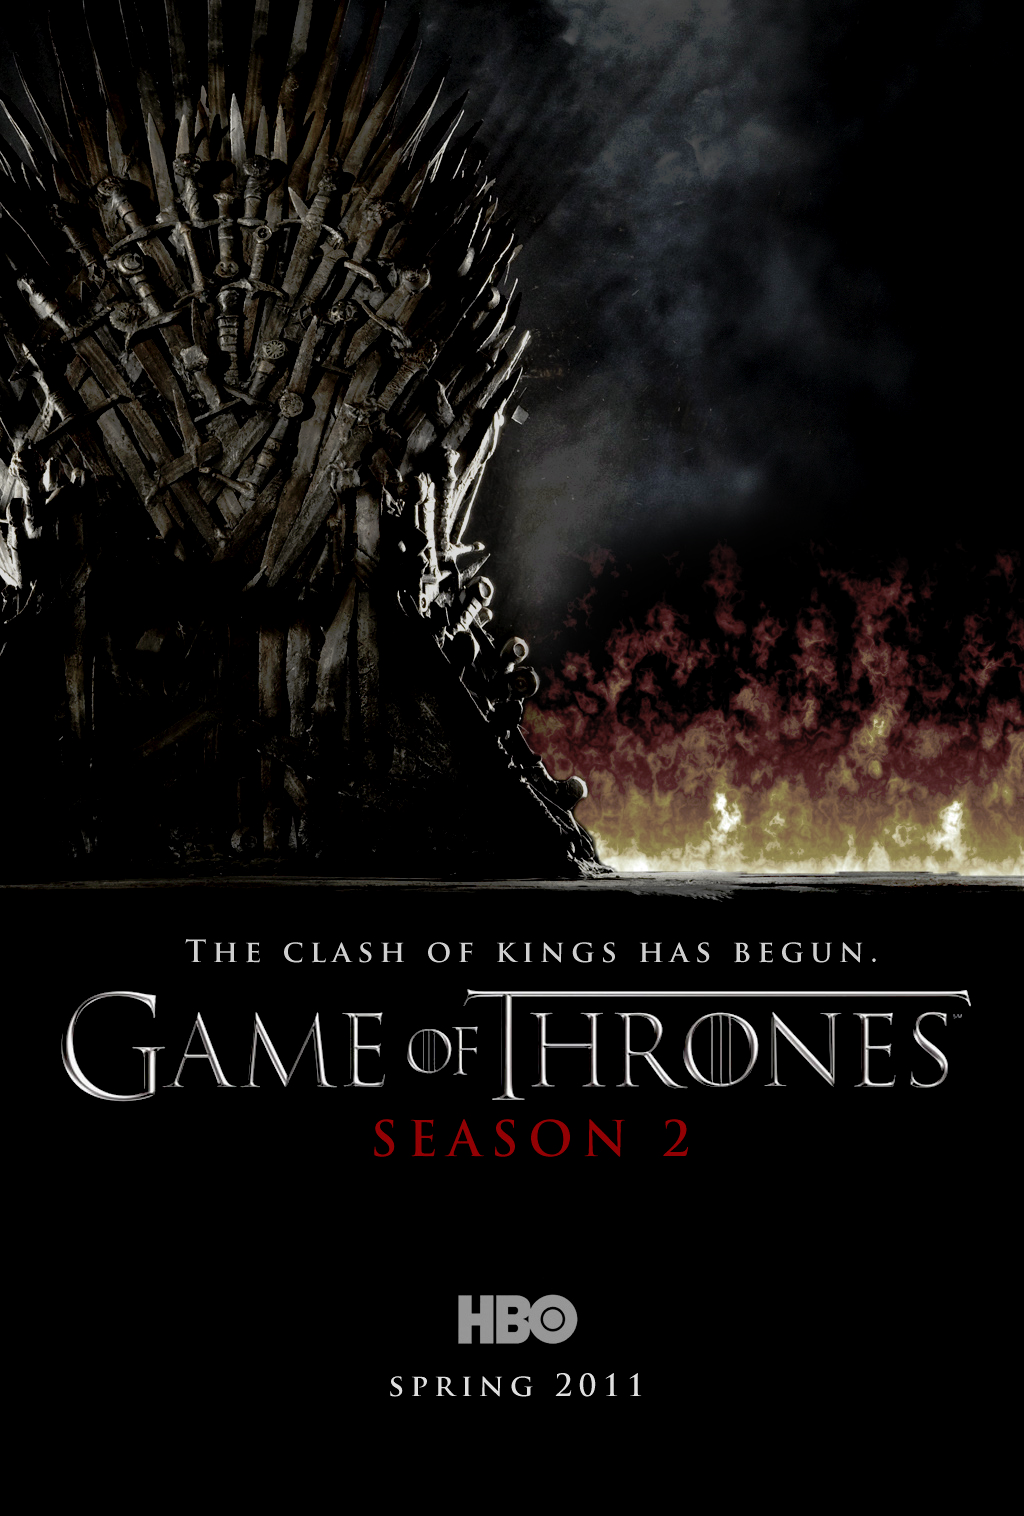 Game of Thrones Season 2 Poster Game of Thrones Fan Art (24250987